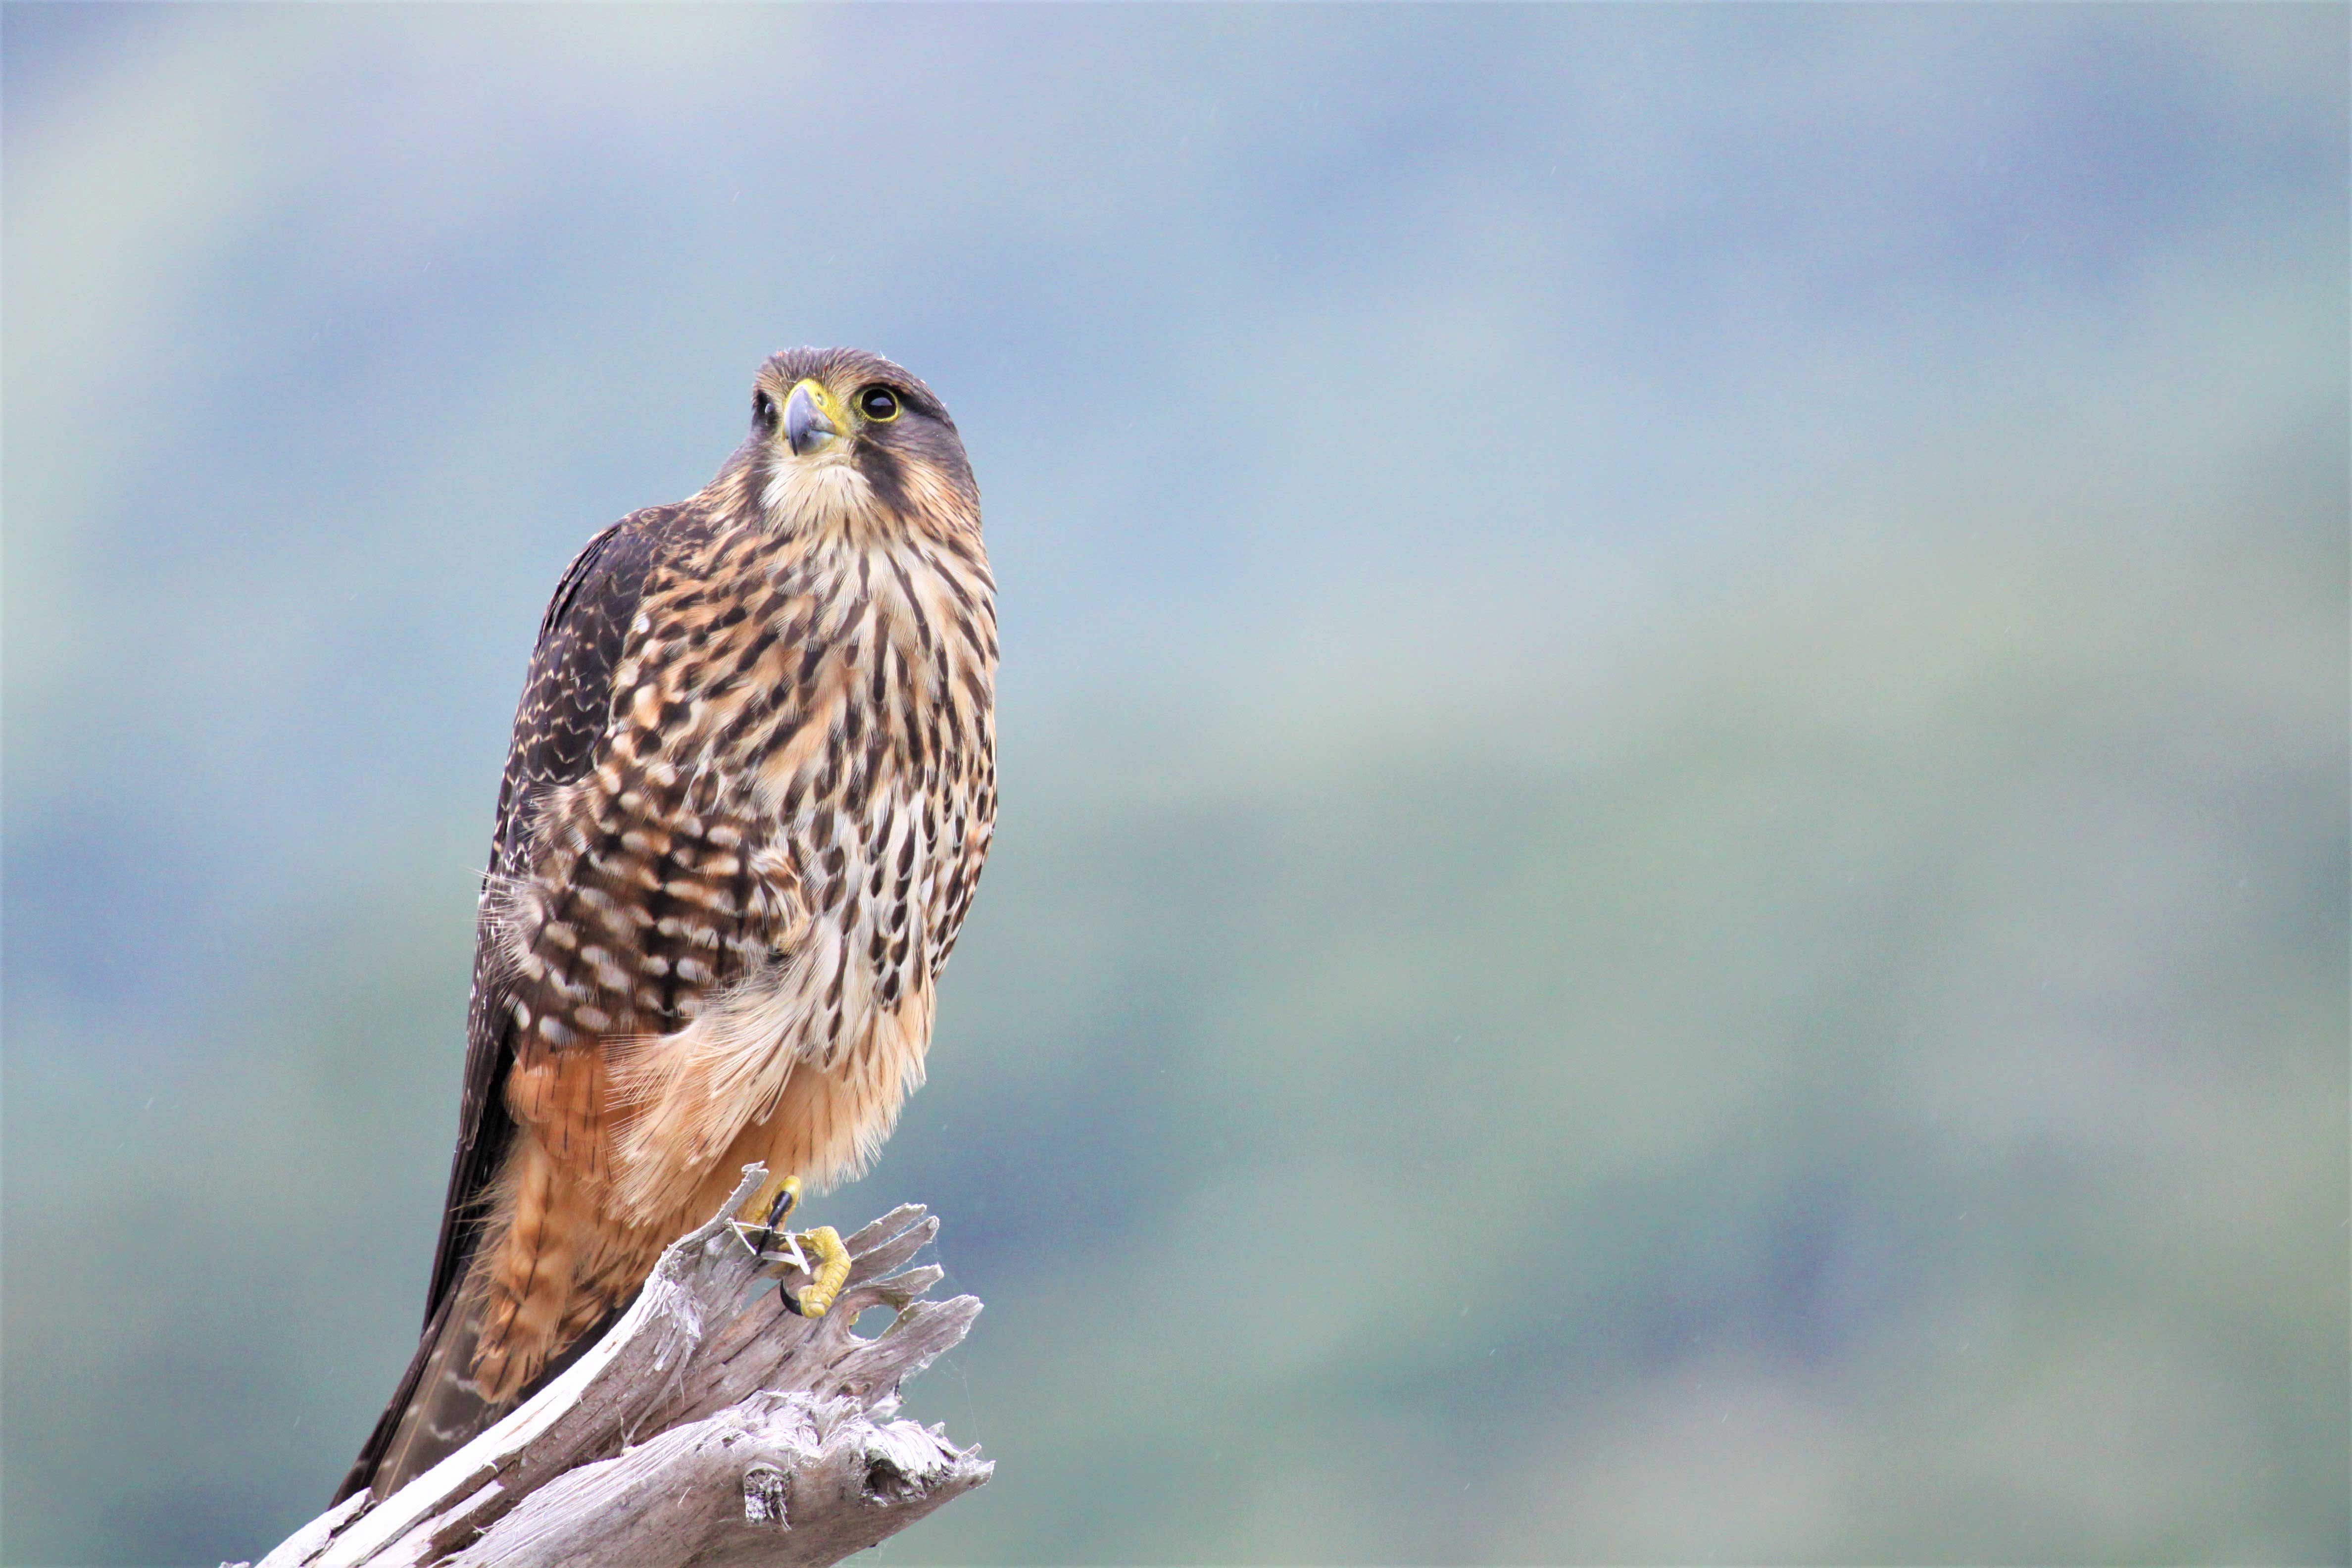 Male kārearea (New Zealand falcon).  Photo credit: Chifuyu Horikoshi.